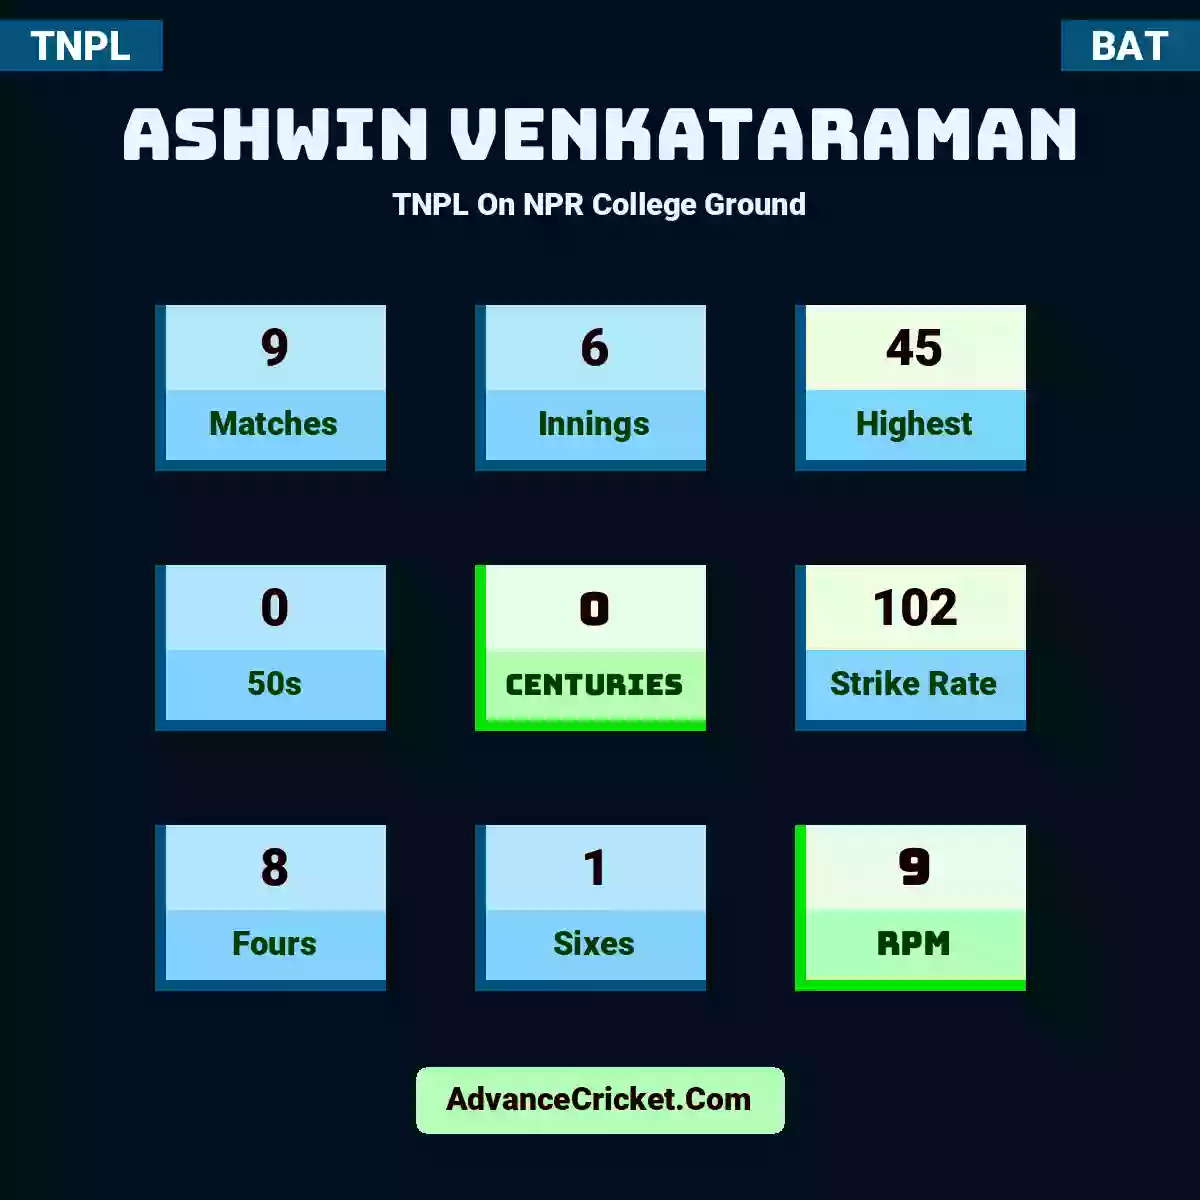 Ashwin Venkataraman TNPL  On NPR College Ground, Ashwin Venkataraman played 9 matches, scored 45 runs as highest, 0 half-centuries, and 0 centuries, with a strike rate of 102. A.Venkataraman hit 8 fours and 1 sixes, with an RPM of 9.